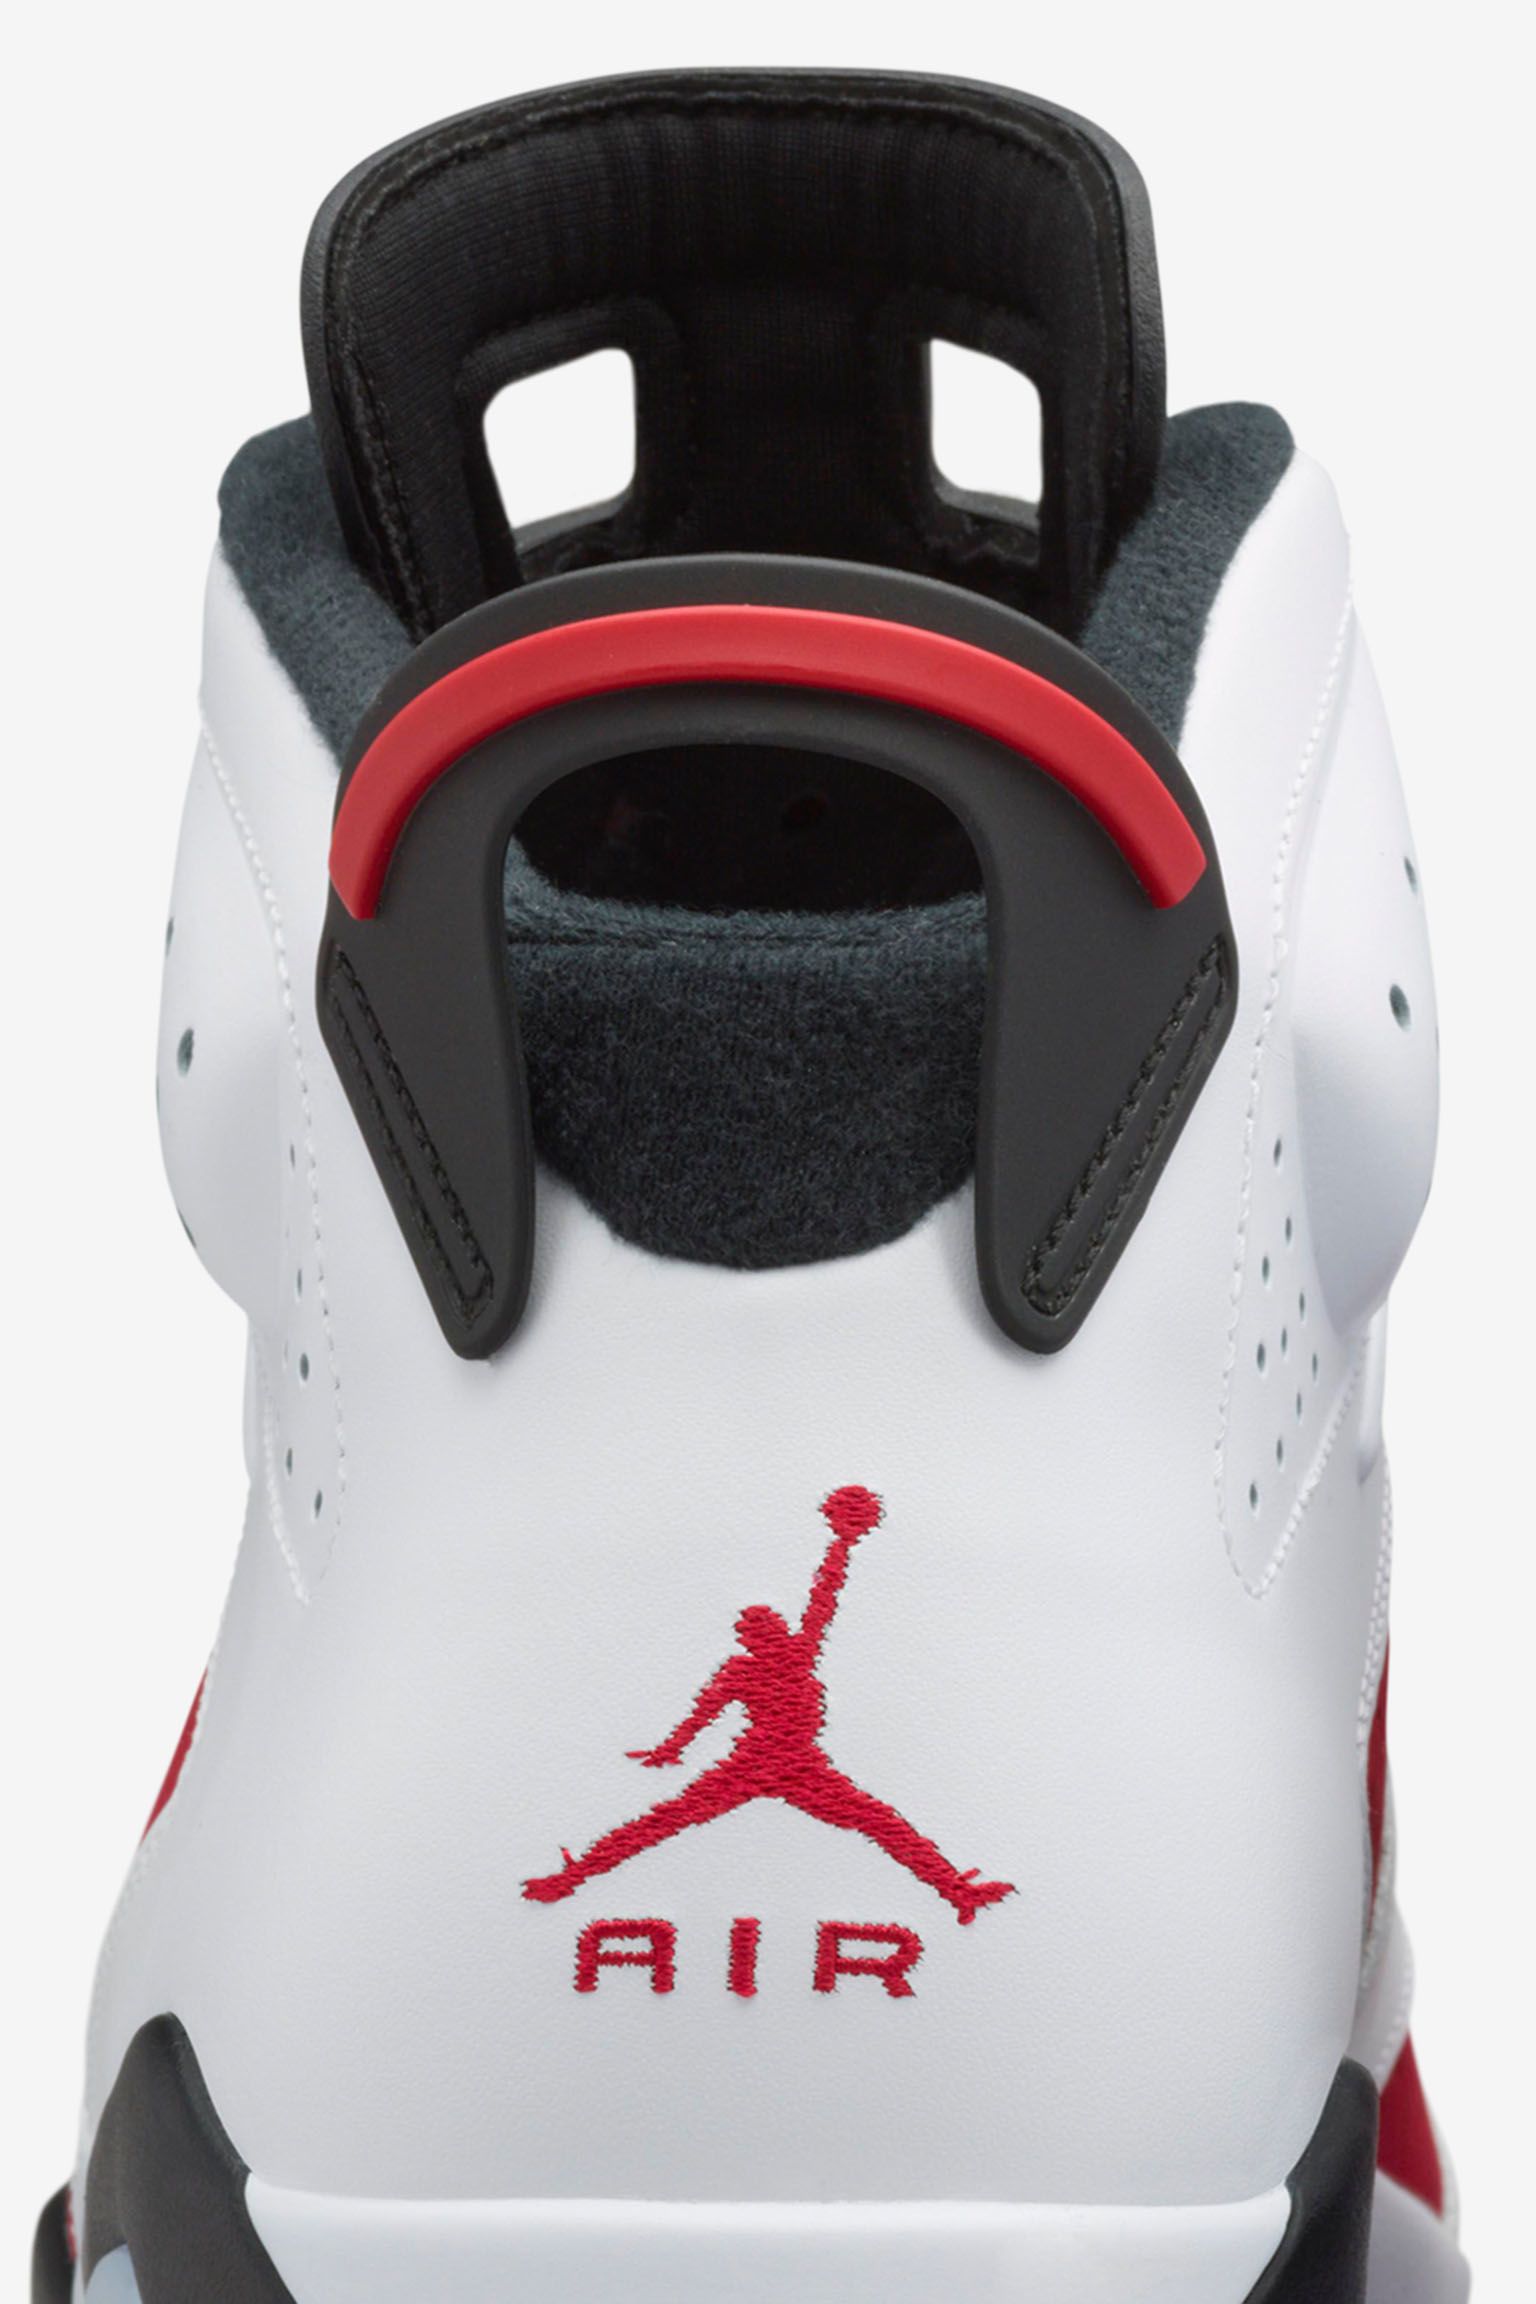 Air Jordan 6 Retro 'Carmine'. Nike SNKRS